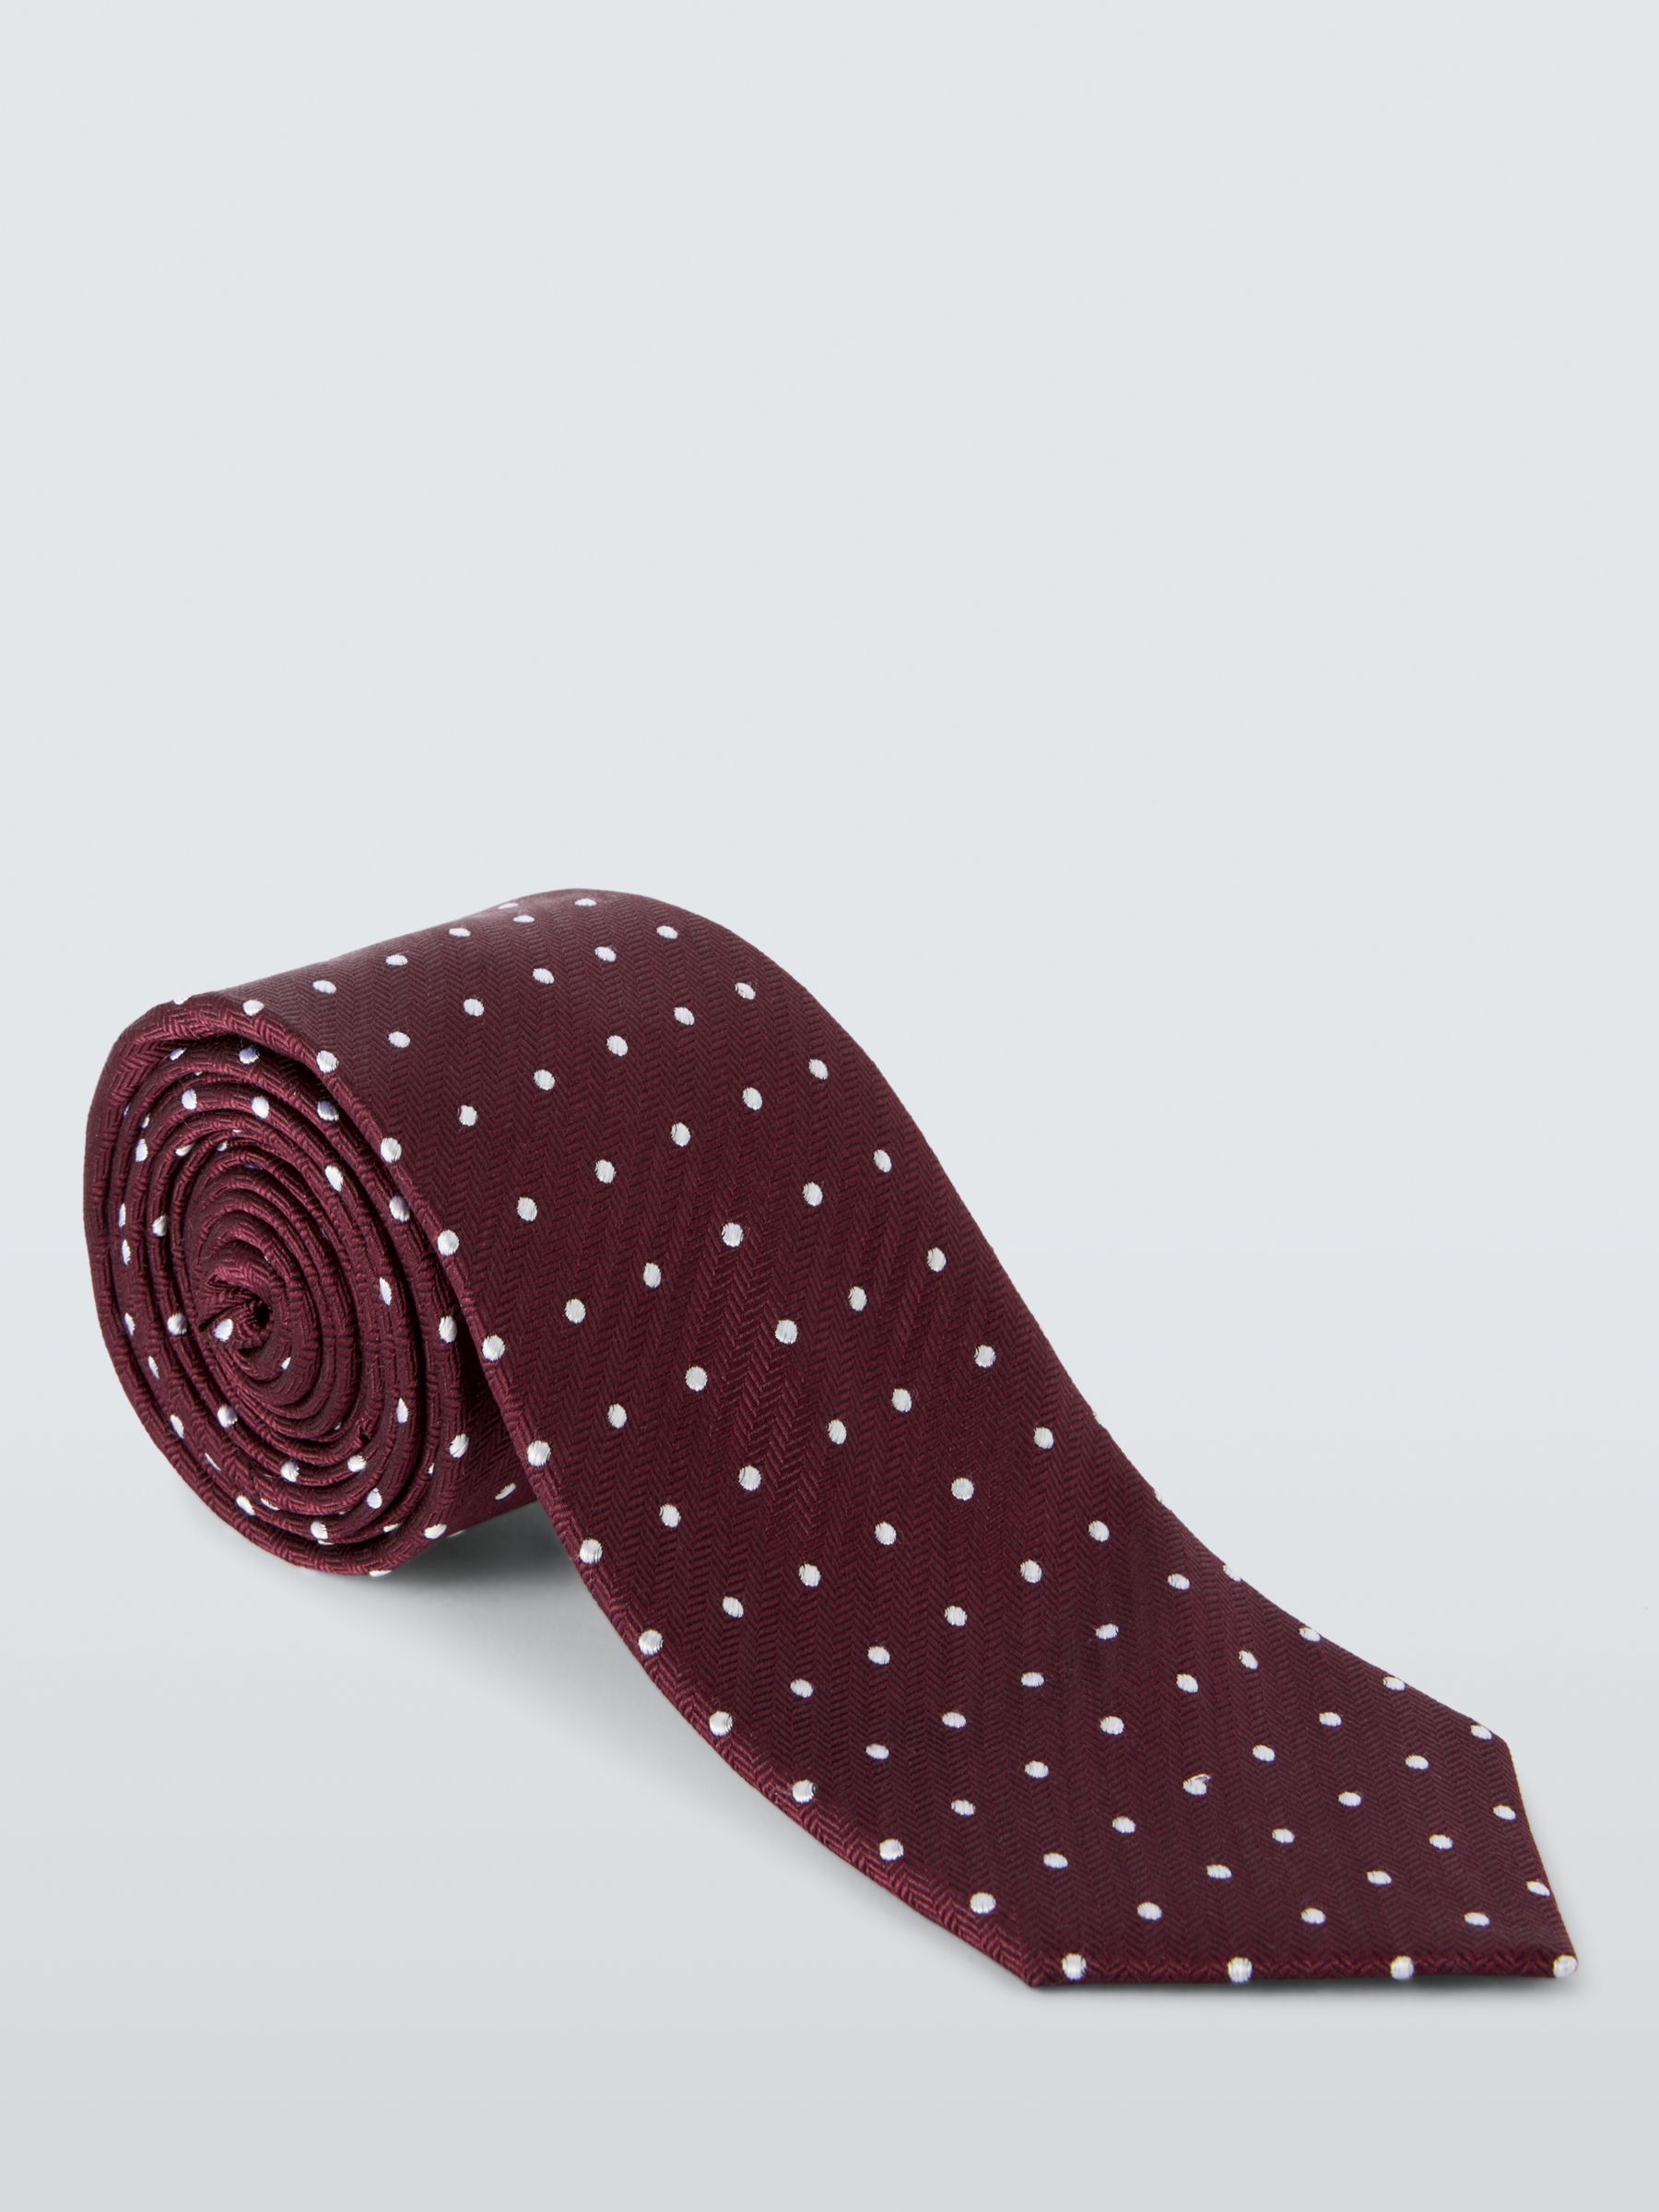 John Lewis Dot Silk Tie, Burgundy, One Size